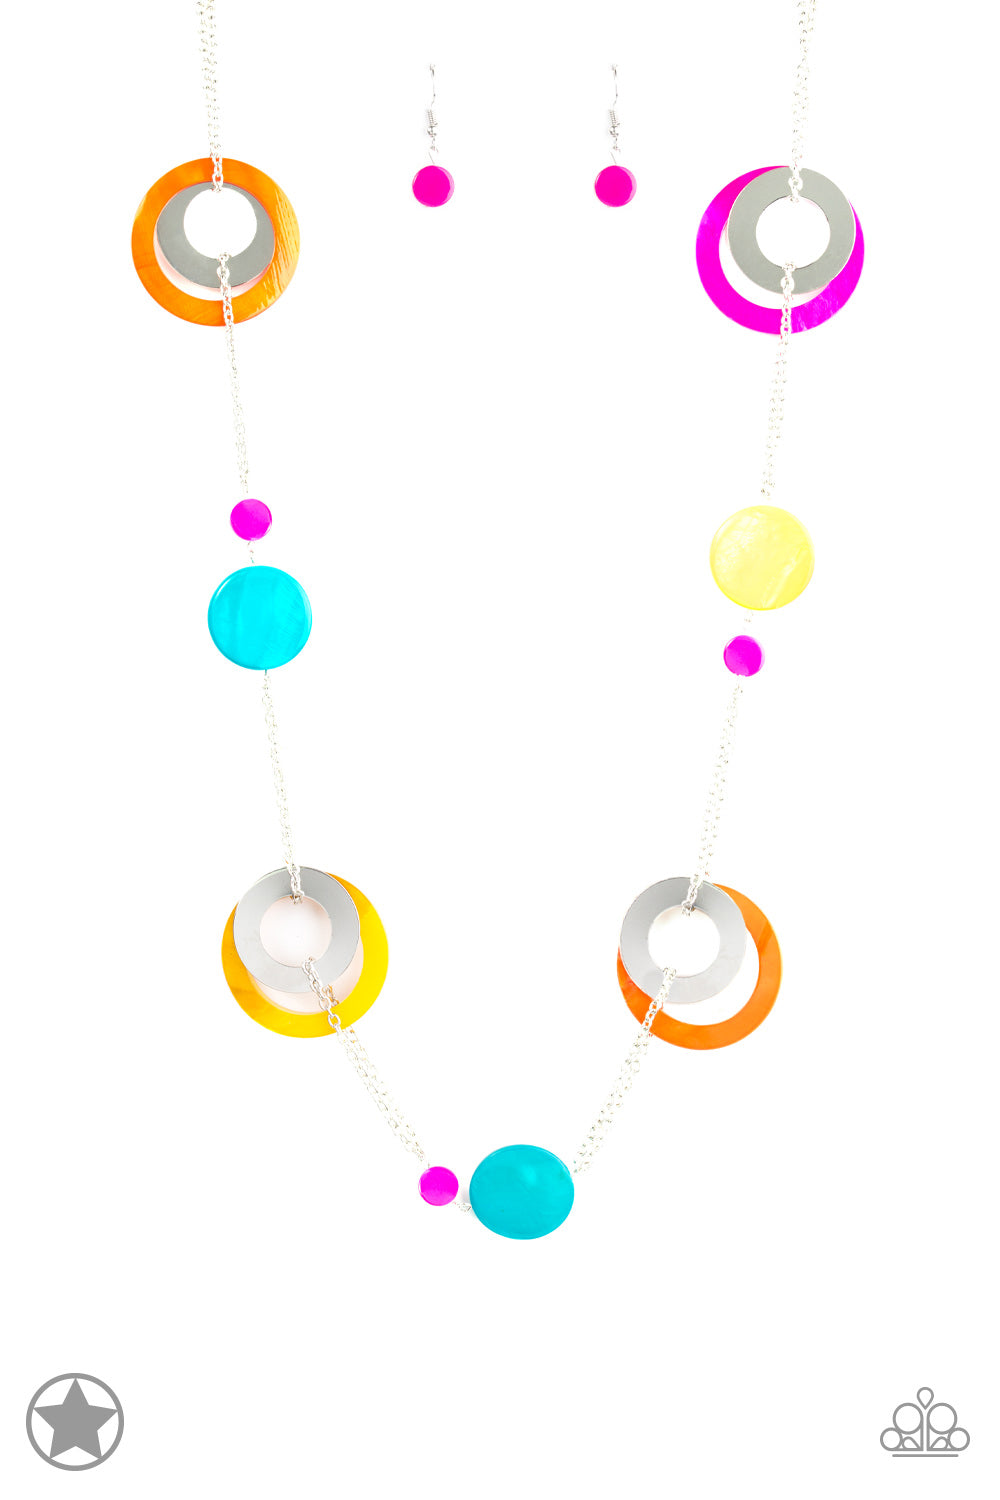 Kaleidoscopically Captivating - Multicolor necklace (Blockbuster)